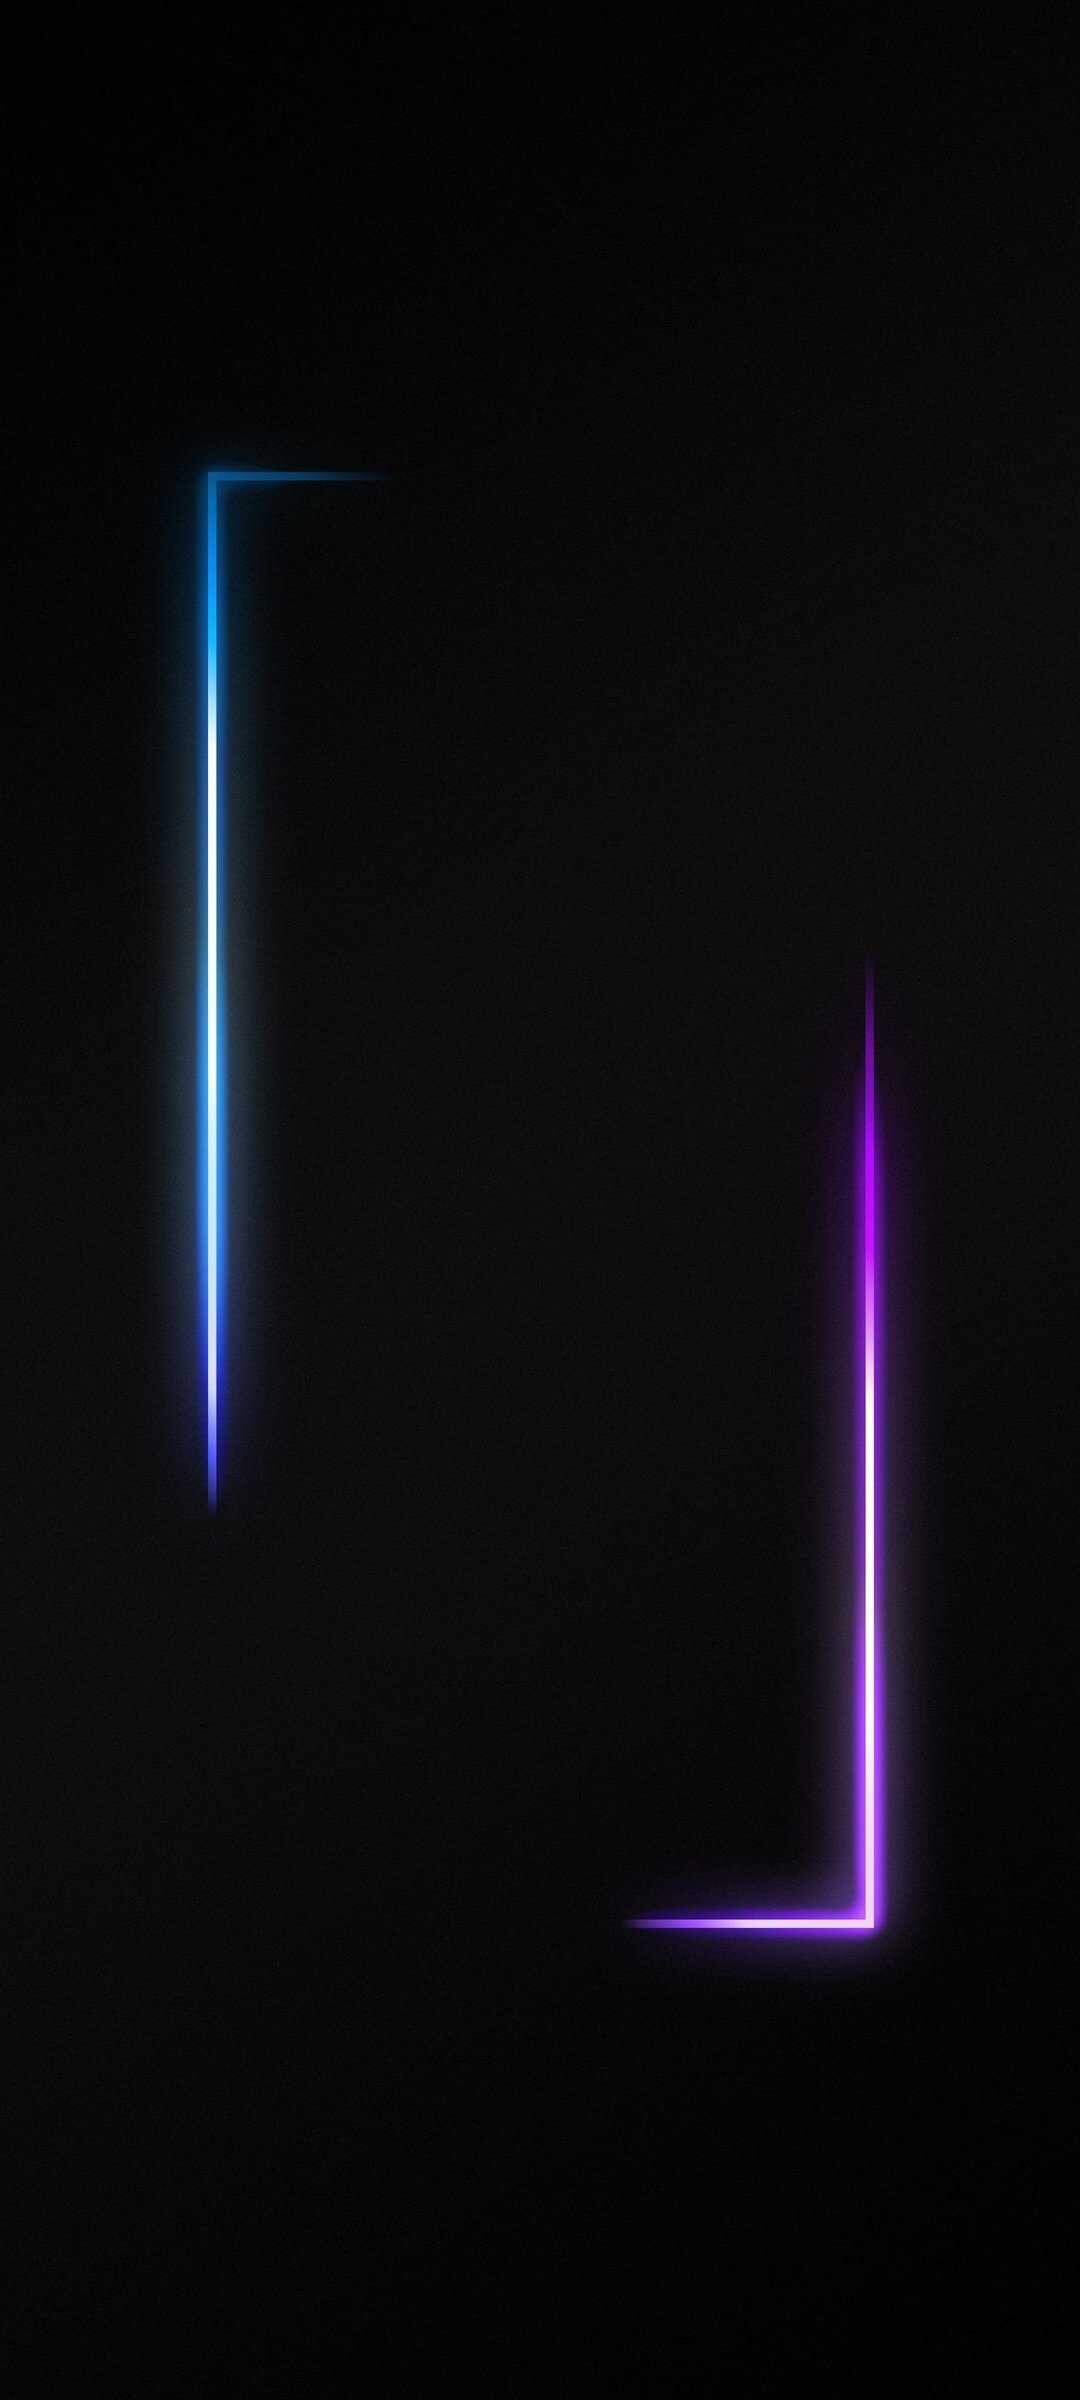 Glow in the Dark: Neon lines, Glowing edges, Minimalistic. 1080x2400 HD Wallpaper.